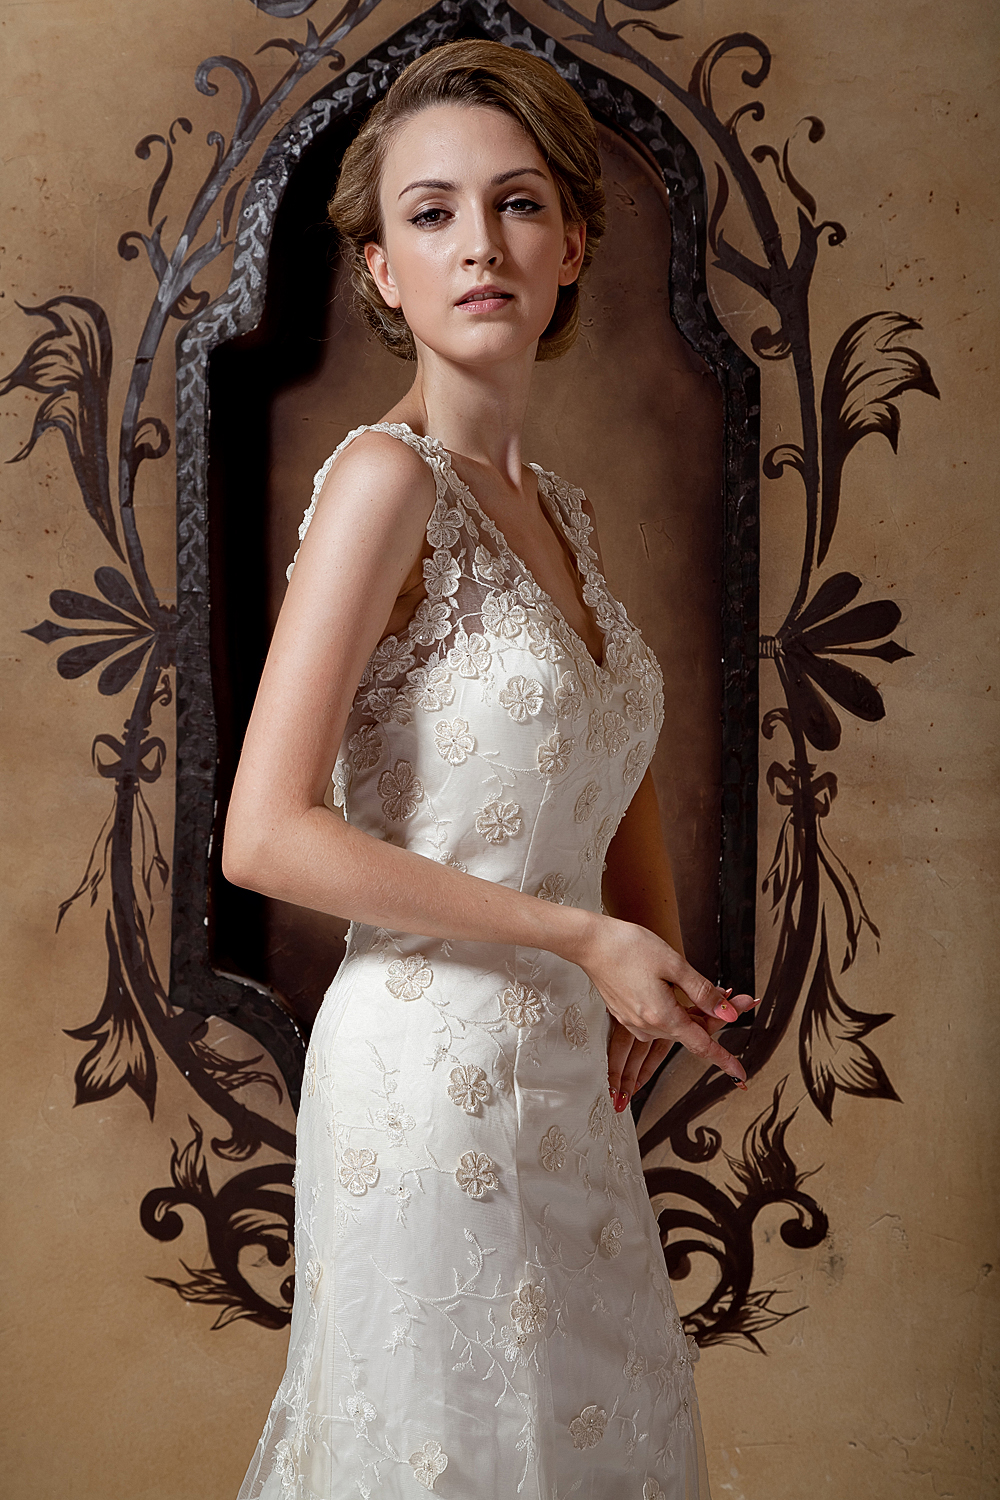 Gorgeous Column V-neck Brush Train Taffeta and Lace Wedding Dress